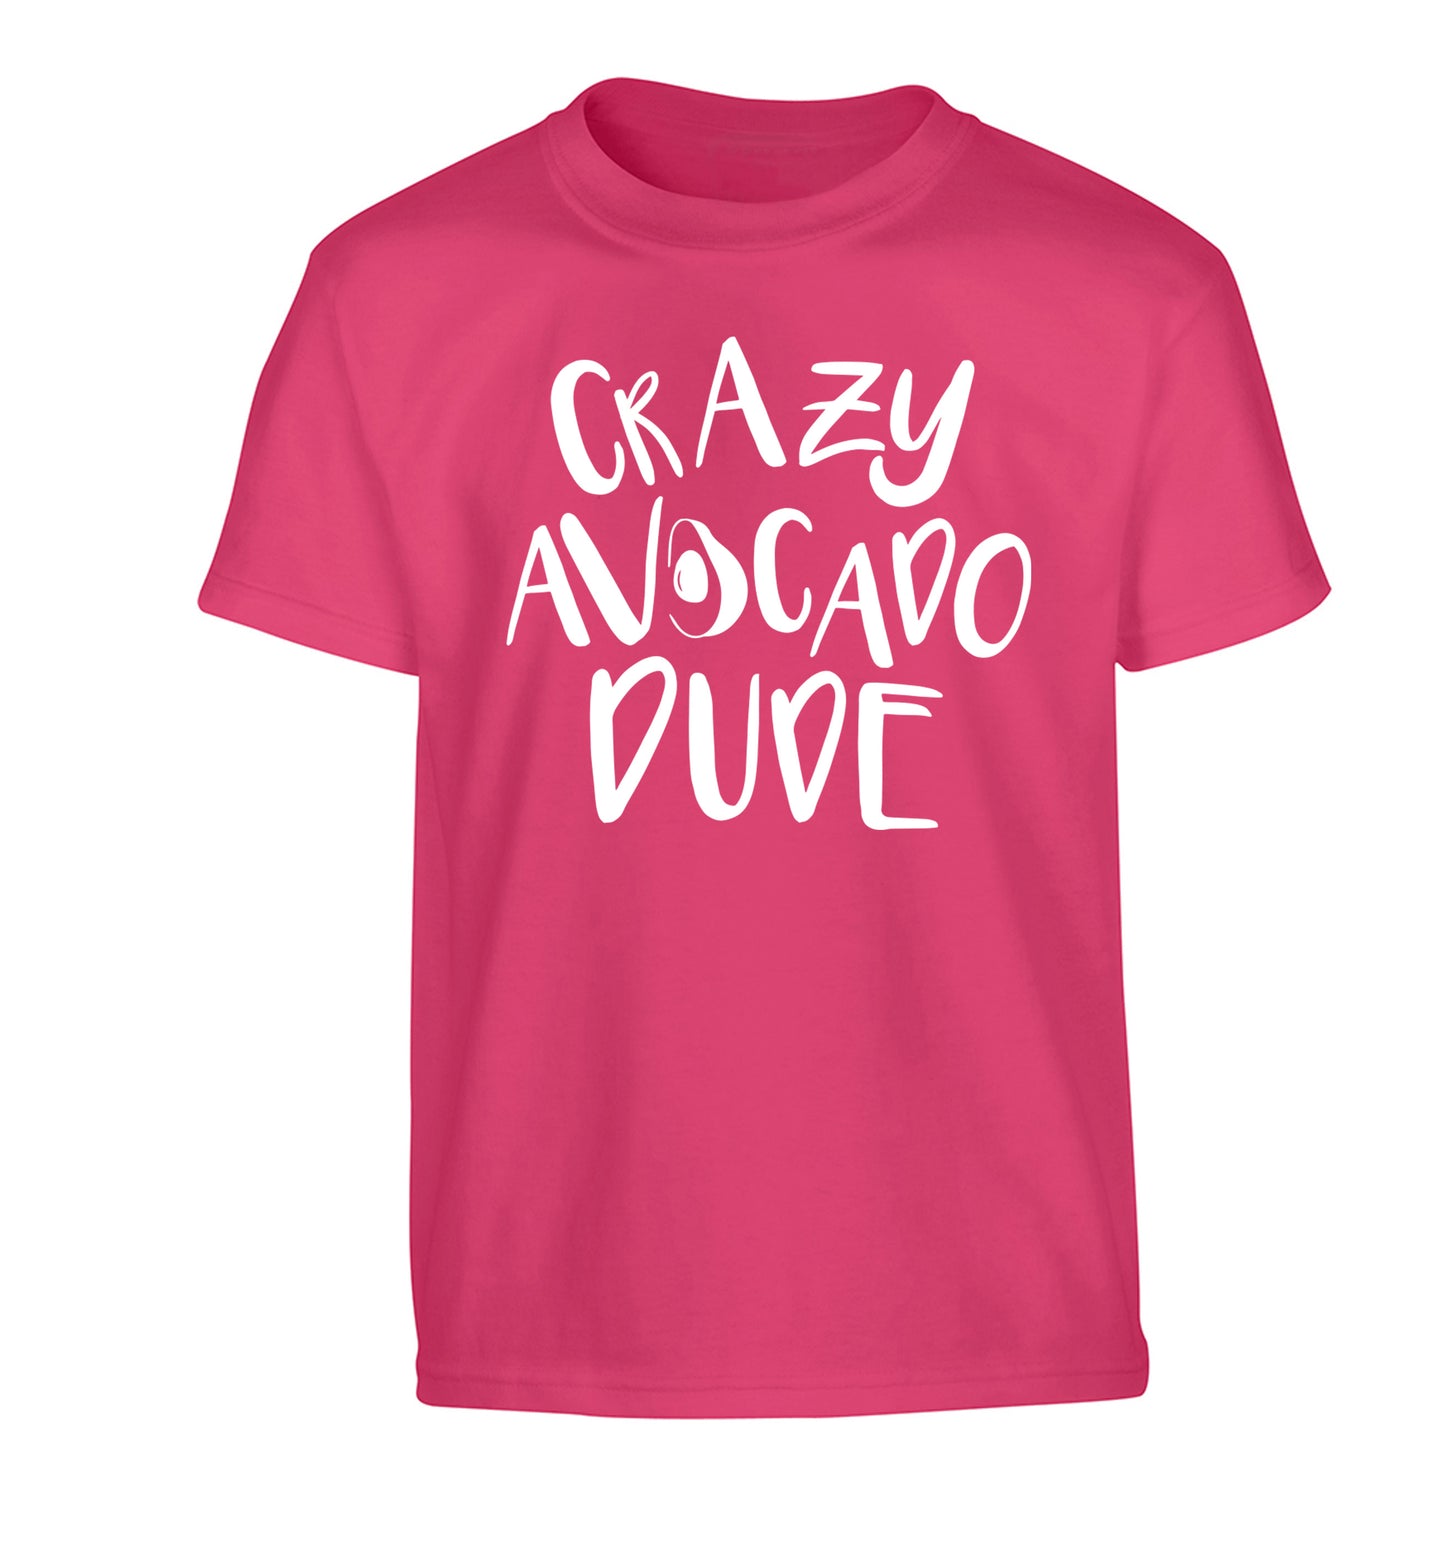 Crazy avocado dude Children's pink Tshirt 12-14 Years